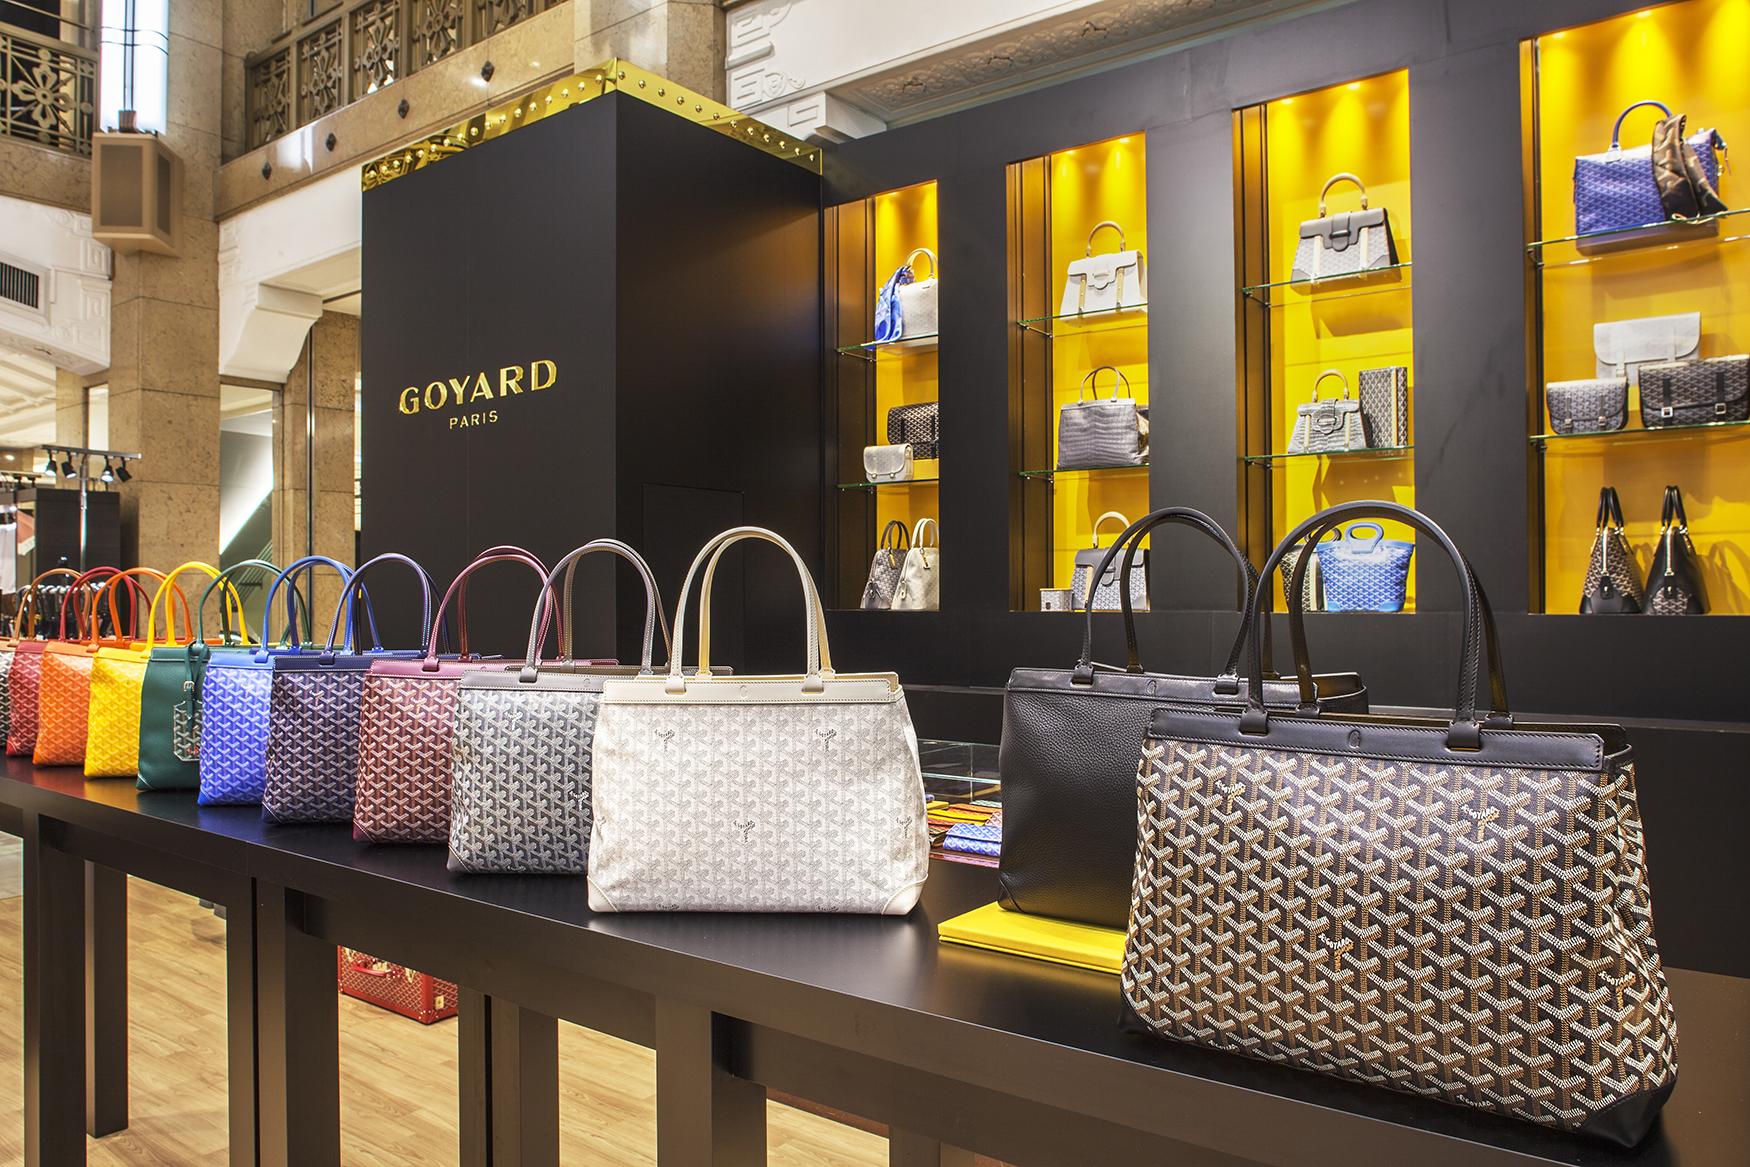 GoyardOfficial on X: After Paris and Tokyo, Goyard opens a store